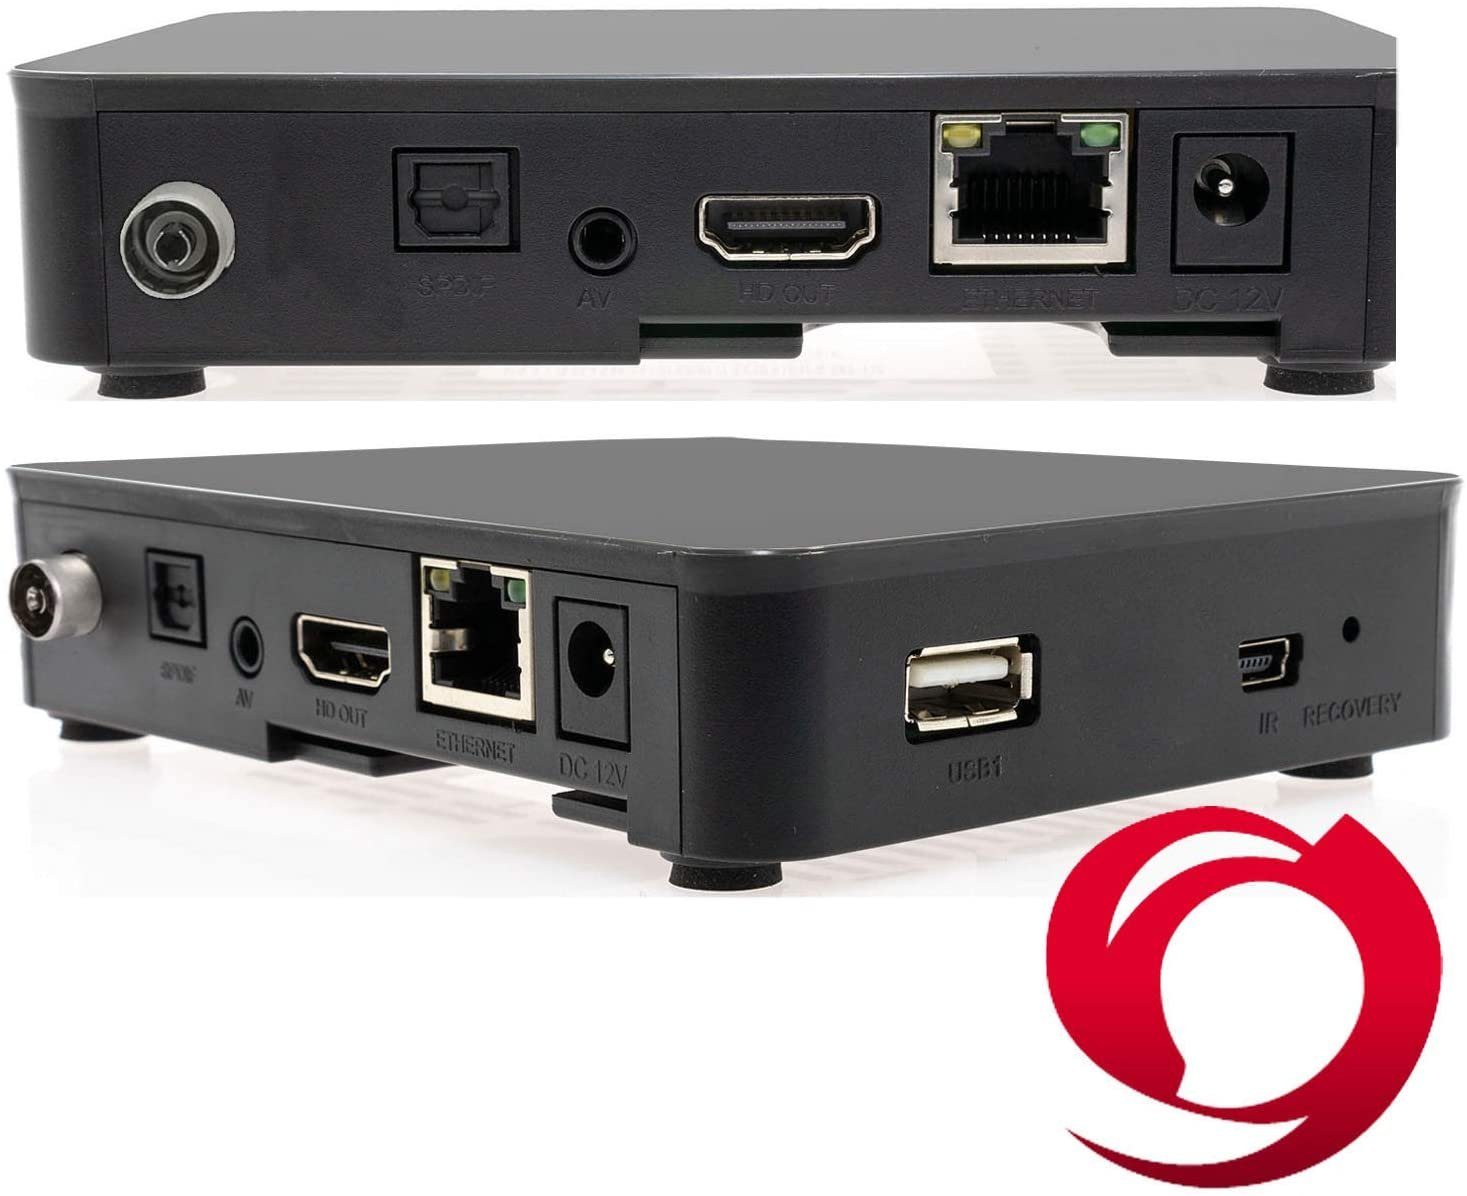 OCTAGON SX88+ SE WL H.265 Box + Kabel-Receiver Hybrid-Receiver Mini HD C/T2 Smart IPTV